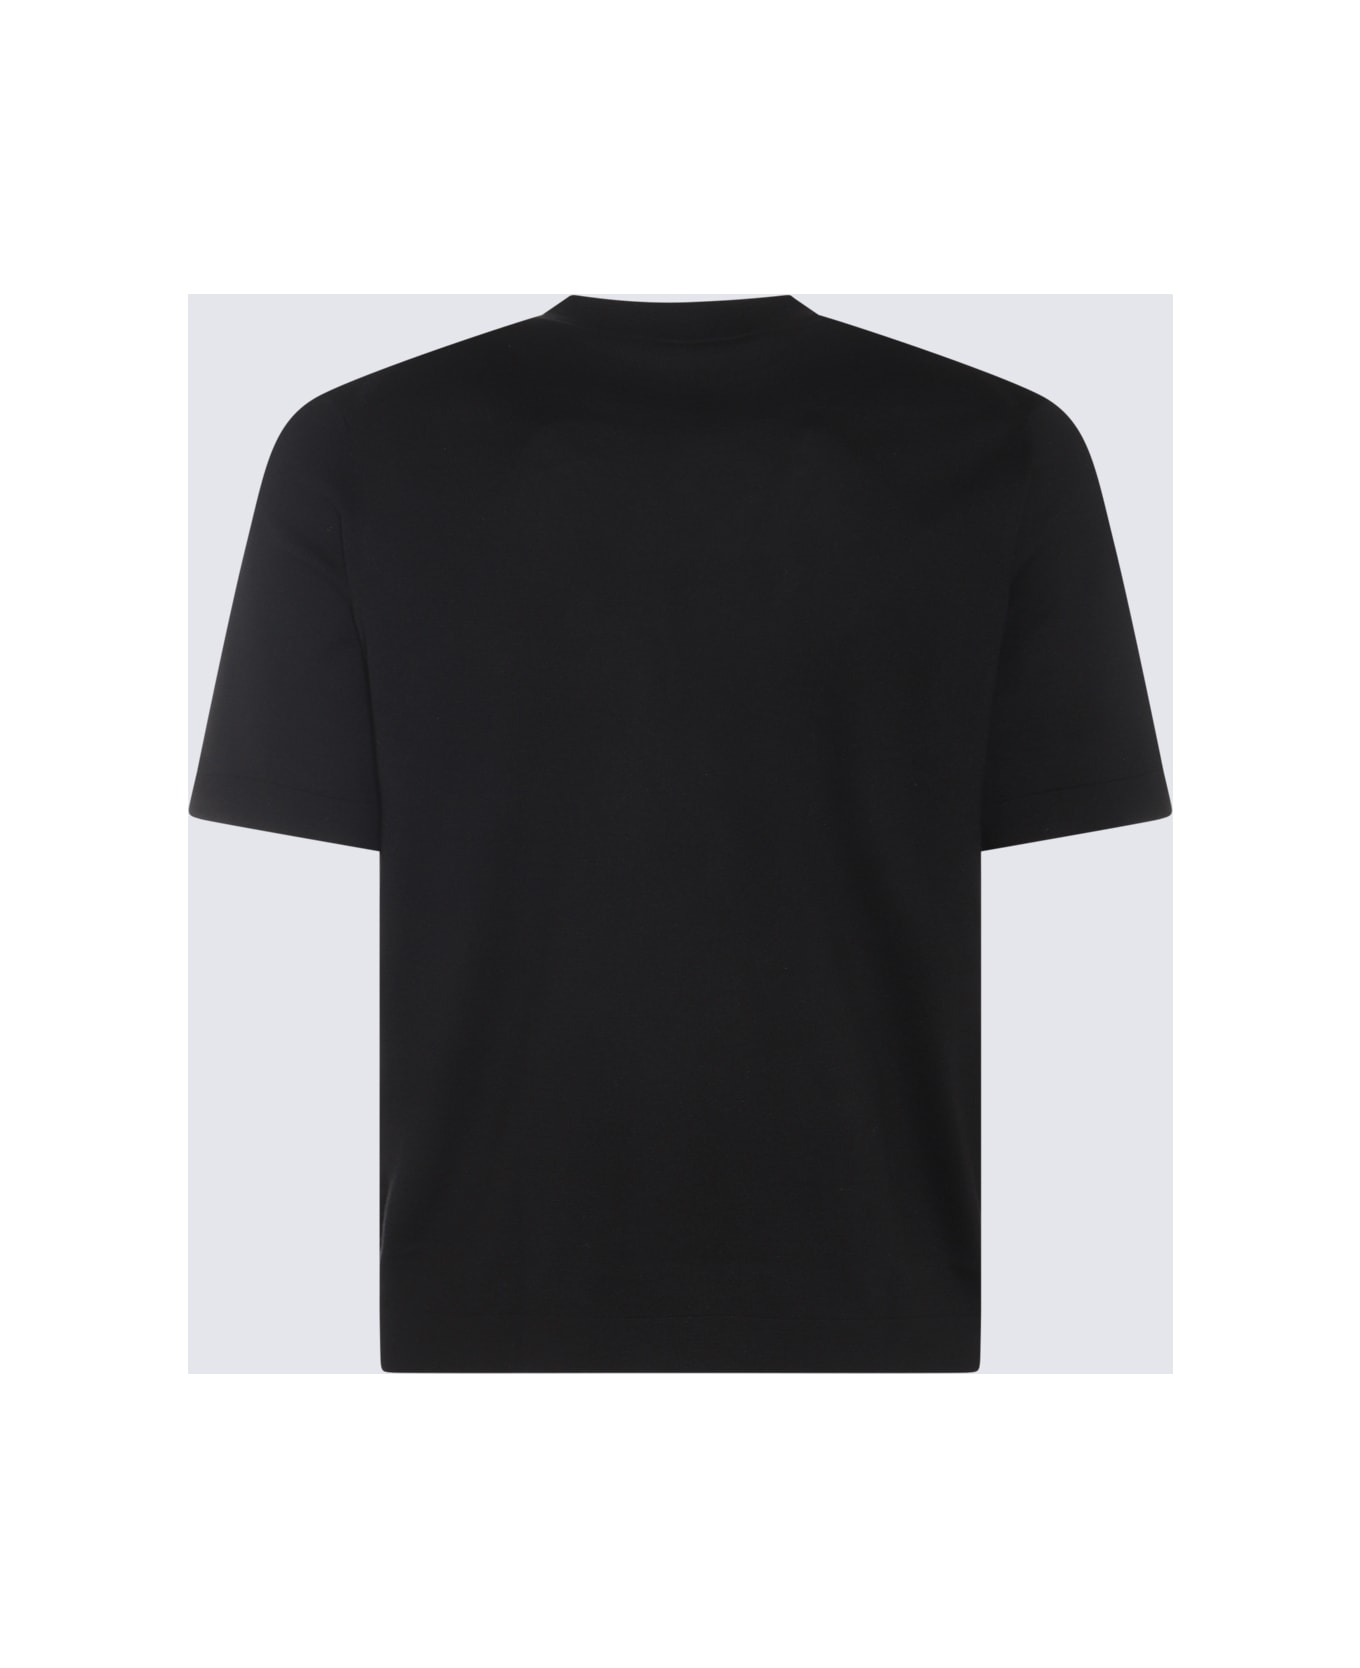 Cruciani Black Cotton T-shirt - Black シャツ